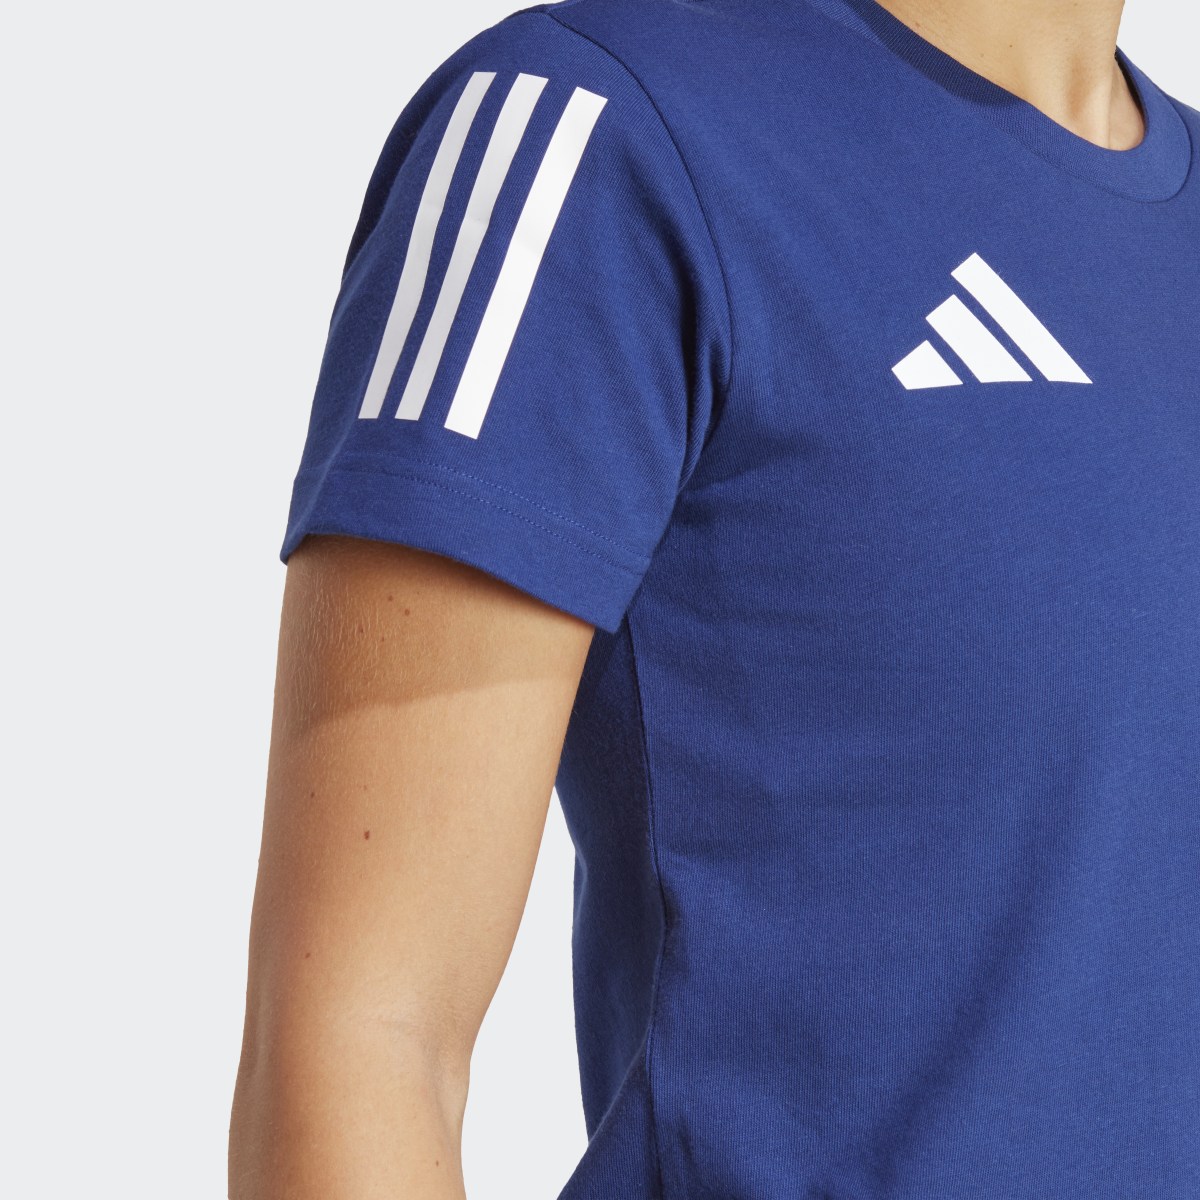 Adidas Frankreich Cotton Graphic T-Shirt. 6